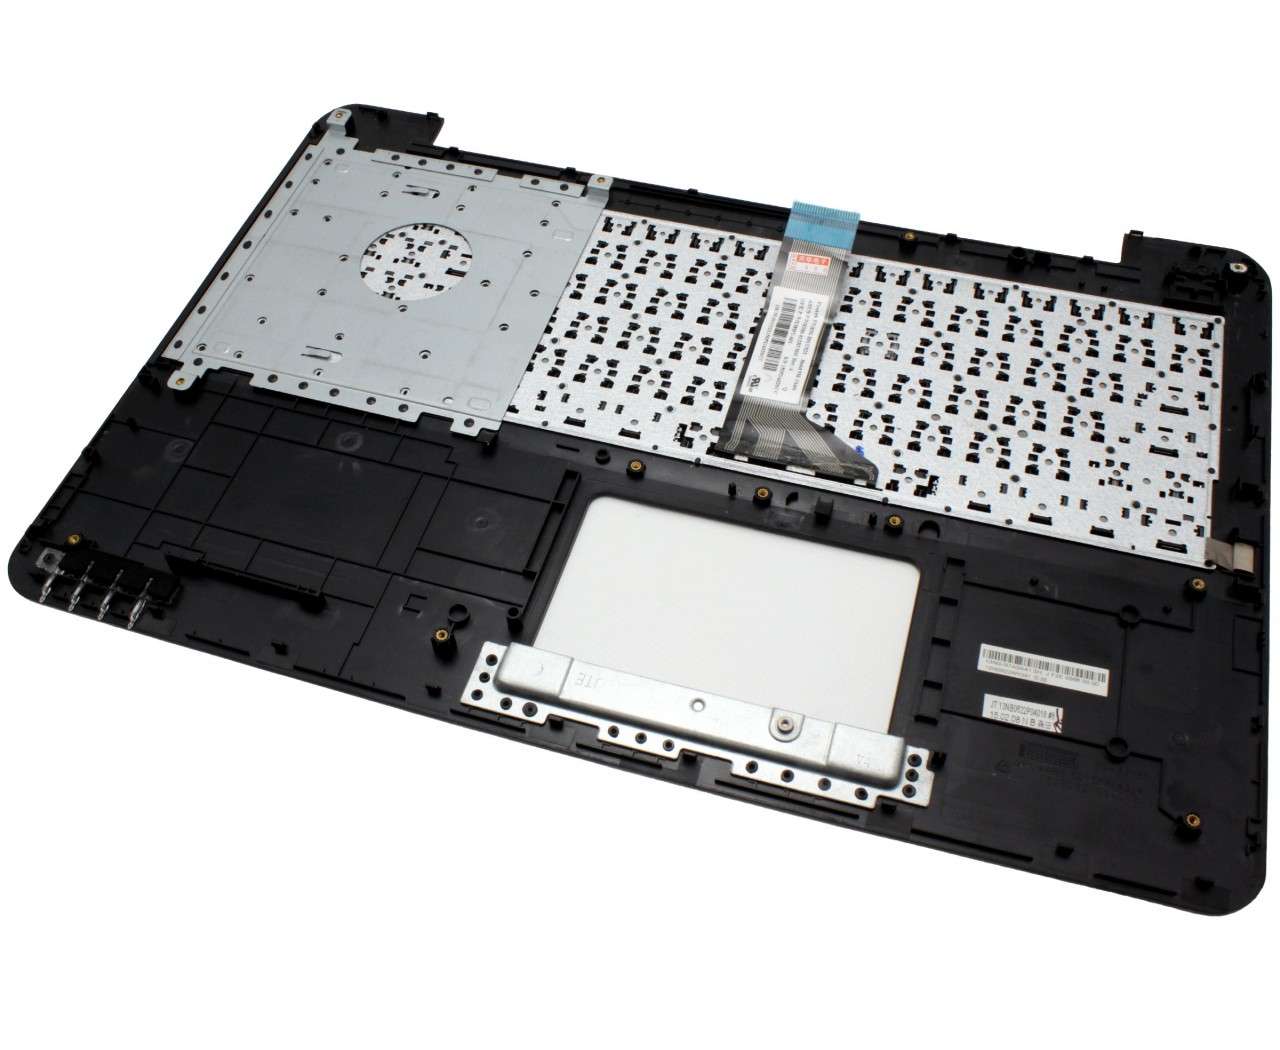 Tastatura Asus X555L Neagra cu Palmrest argintiu